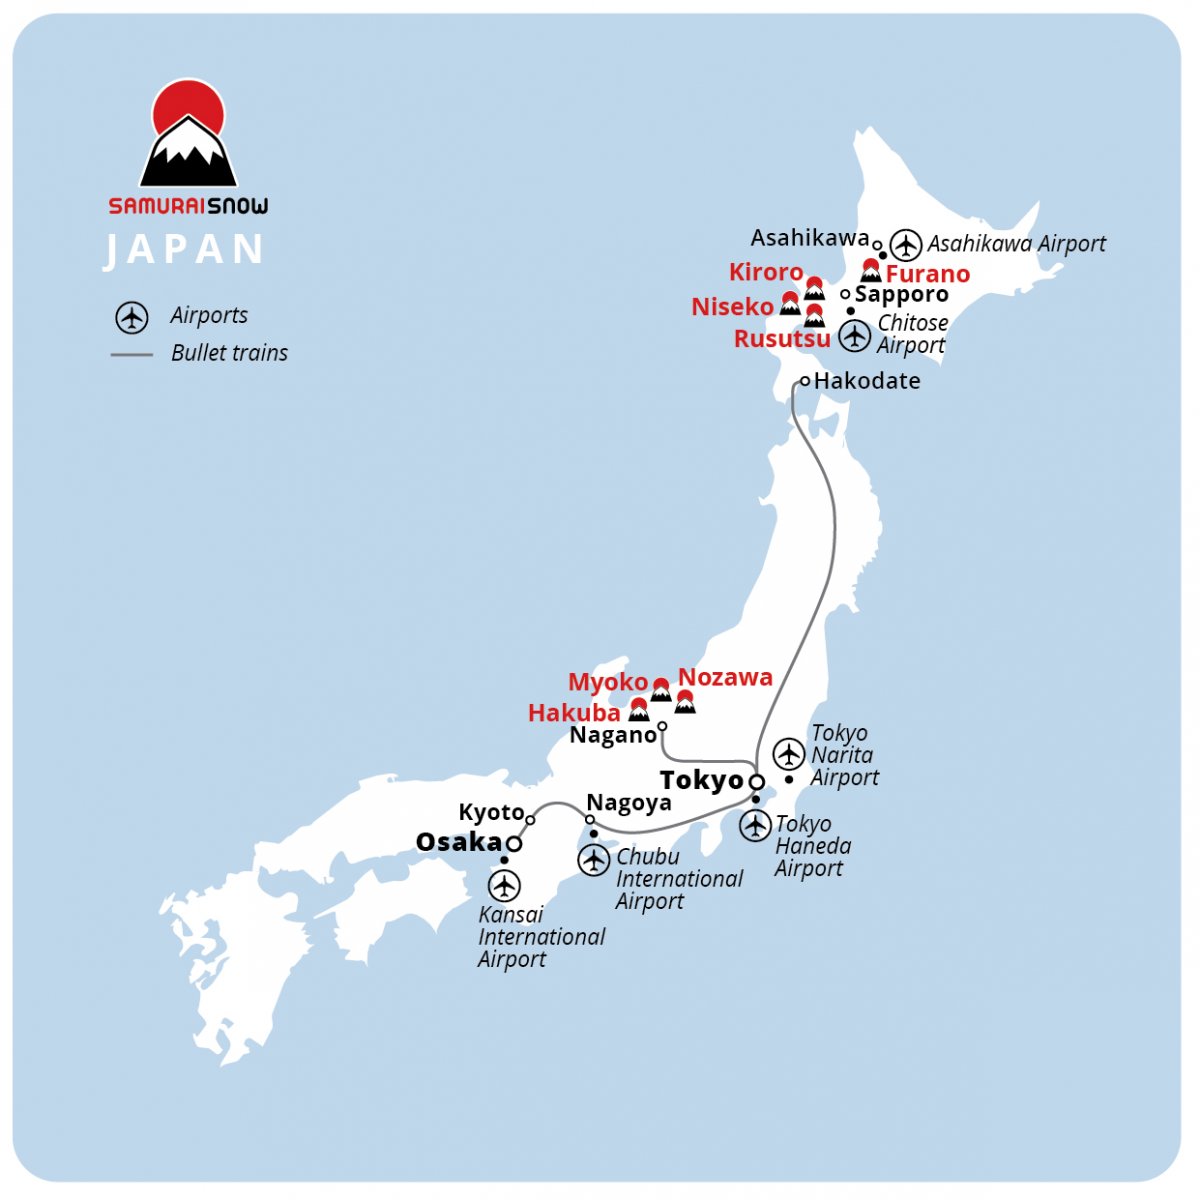 Map of Niseko, Hakuba, Myoko, Tokyo, Kyoto, Sapporo, Chitose Airport, Tokyo Narita Airport, Tokyo Haneda Airport